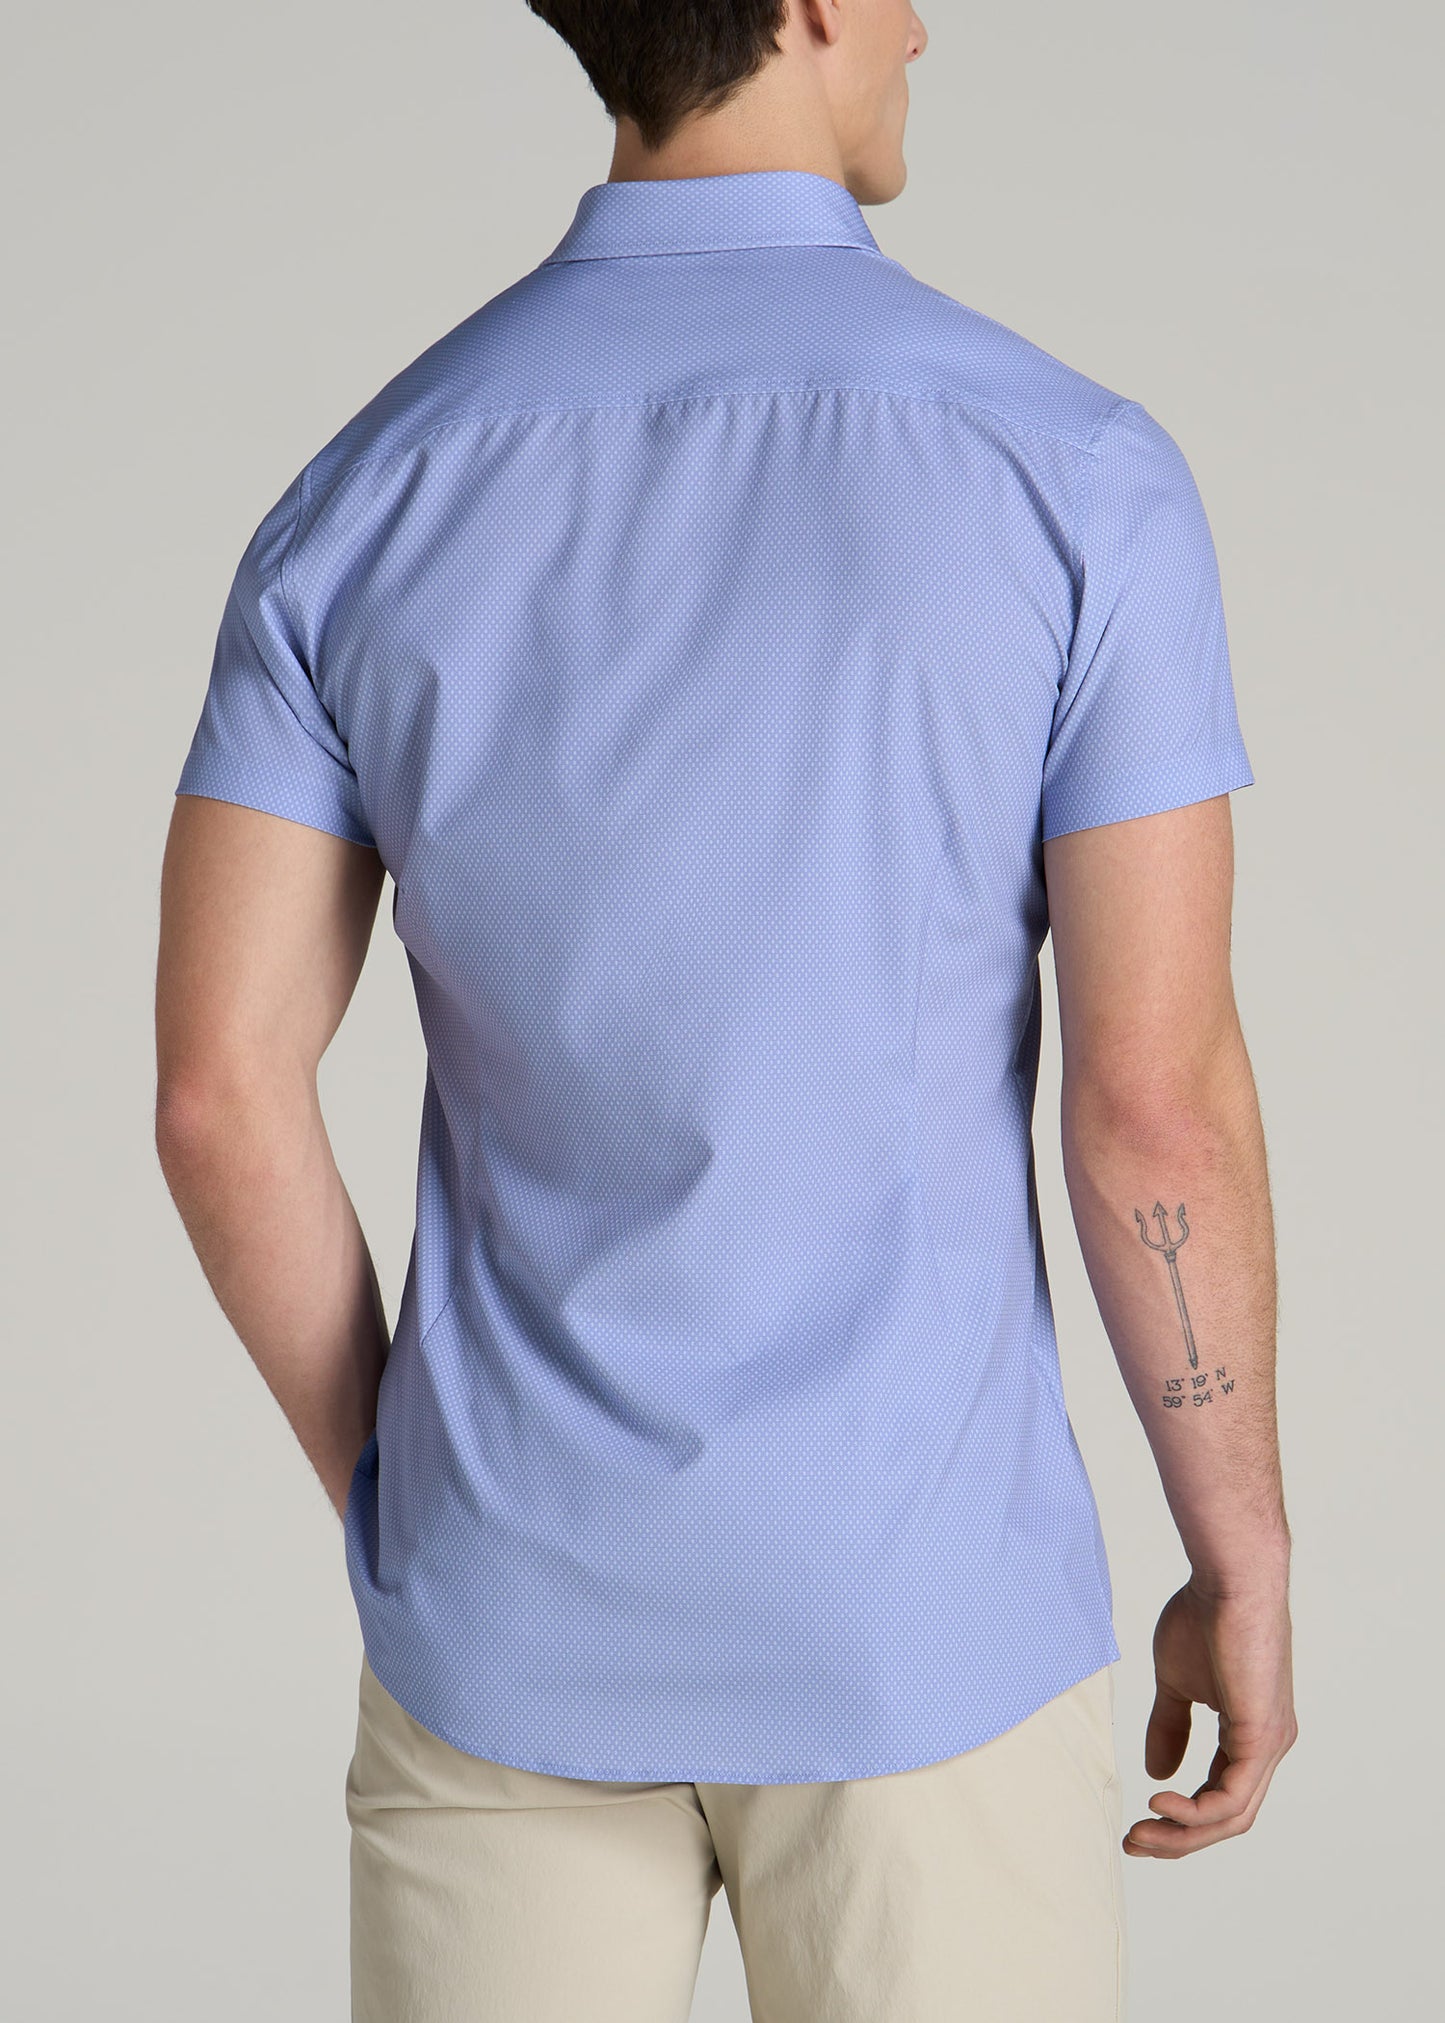 Short Sleeve Traveler Stretch Button Shirt for Tall Men in Blue Diamond Print